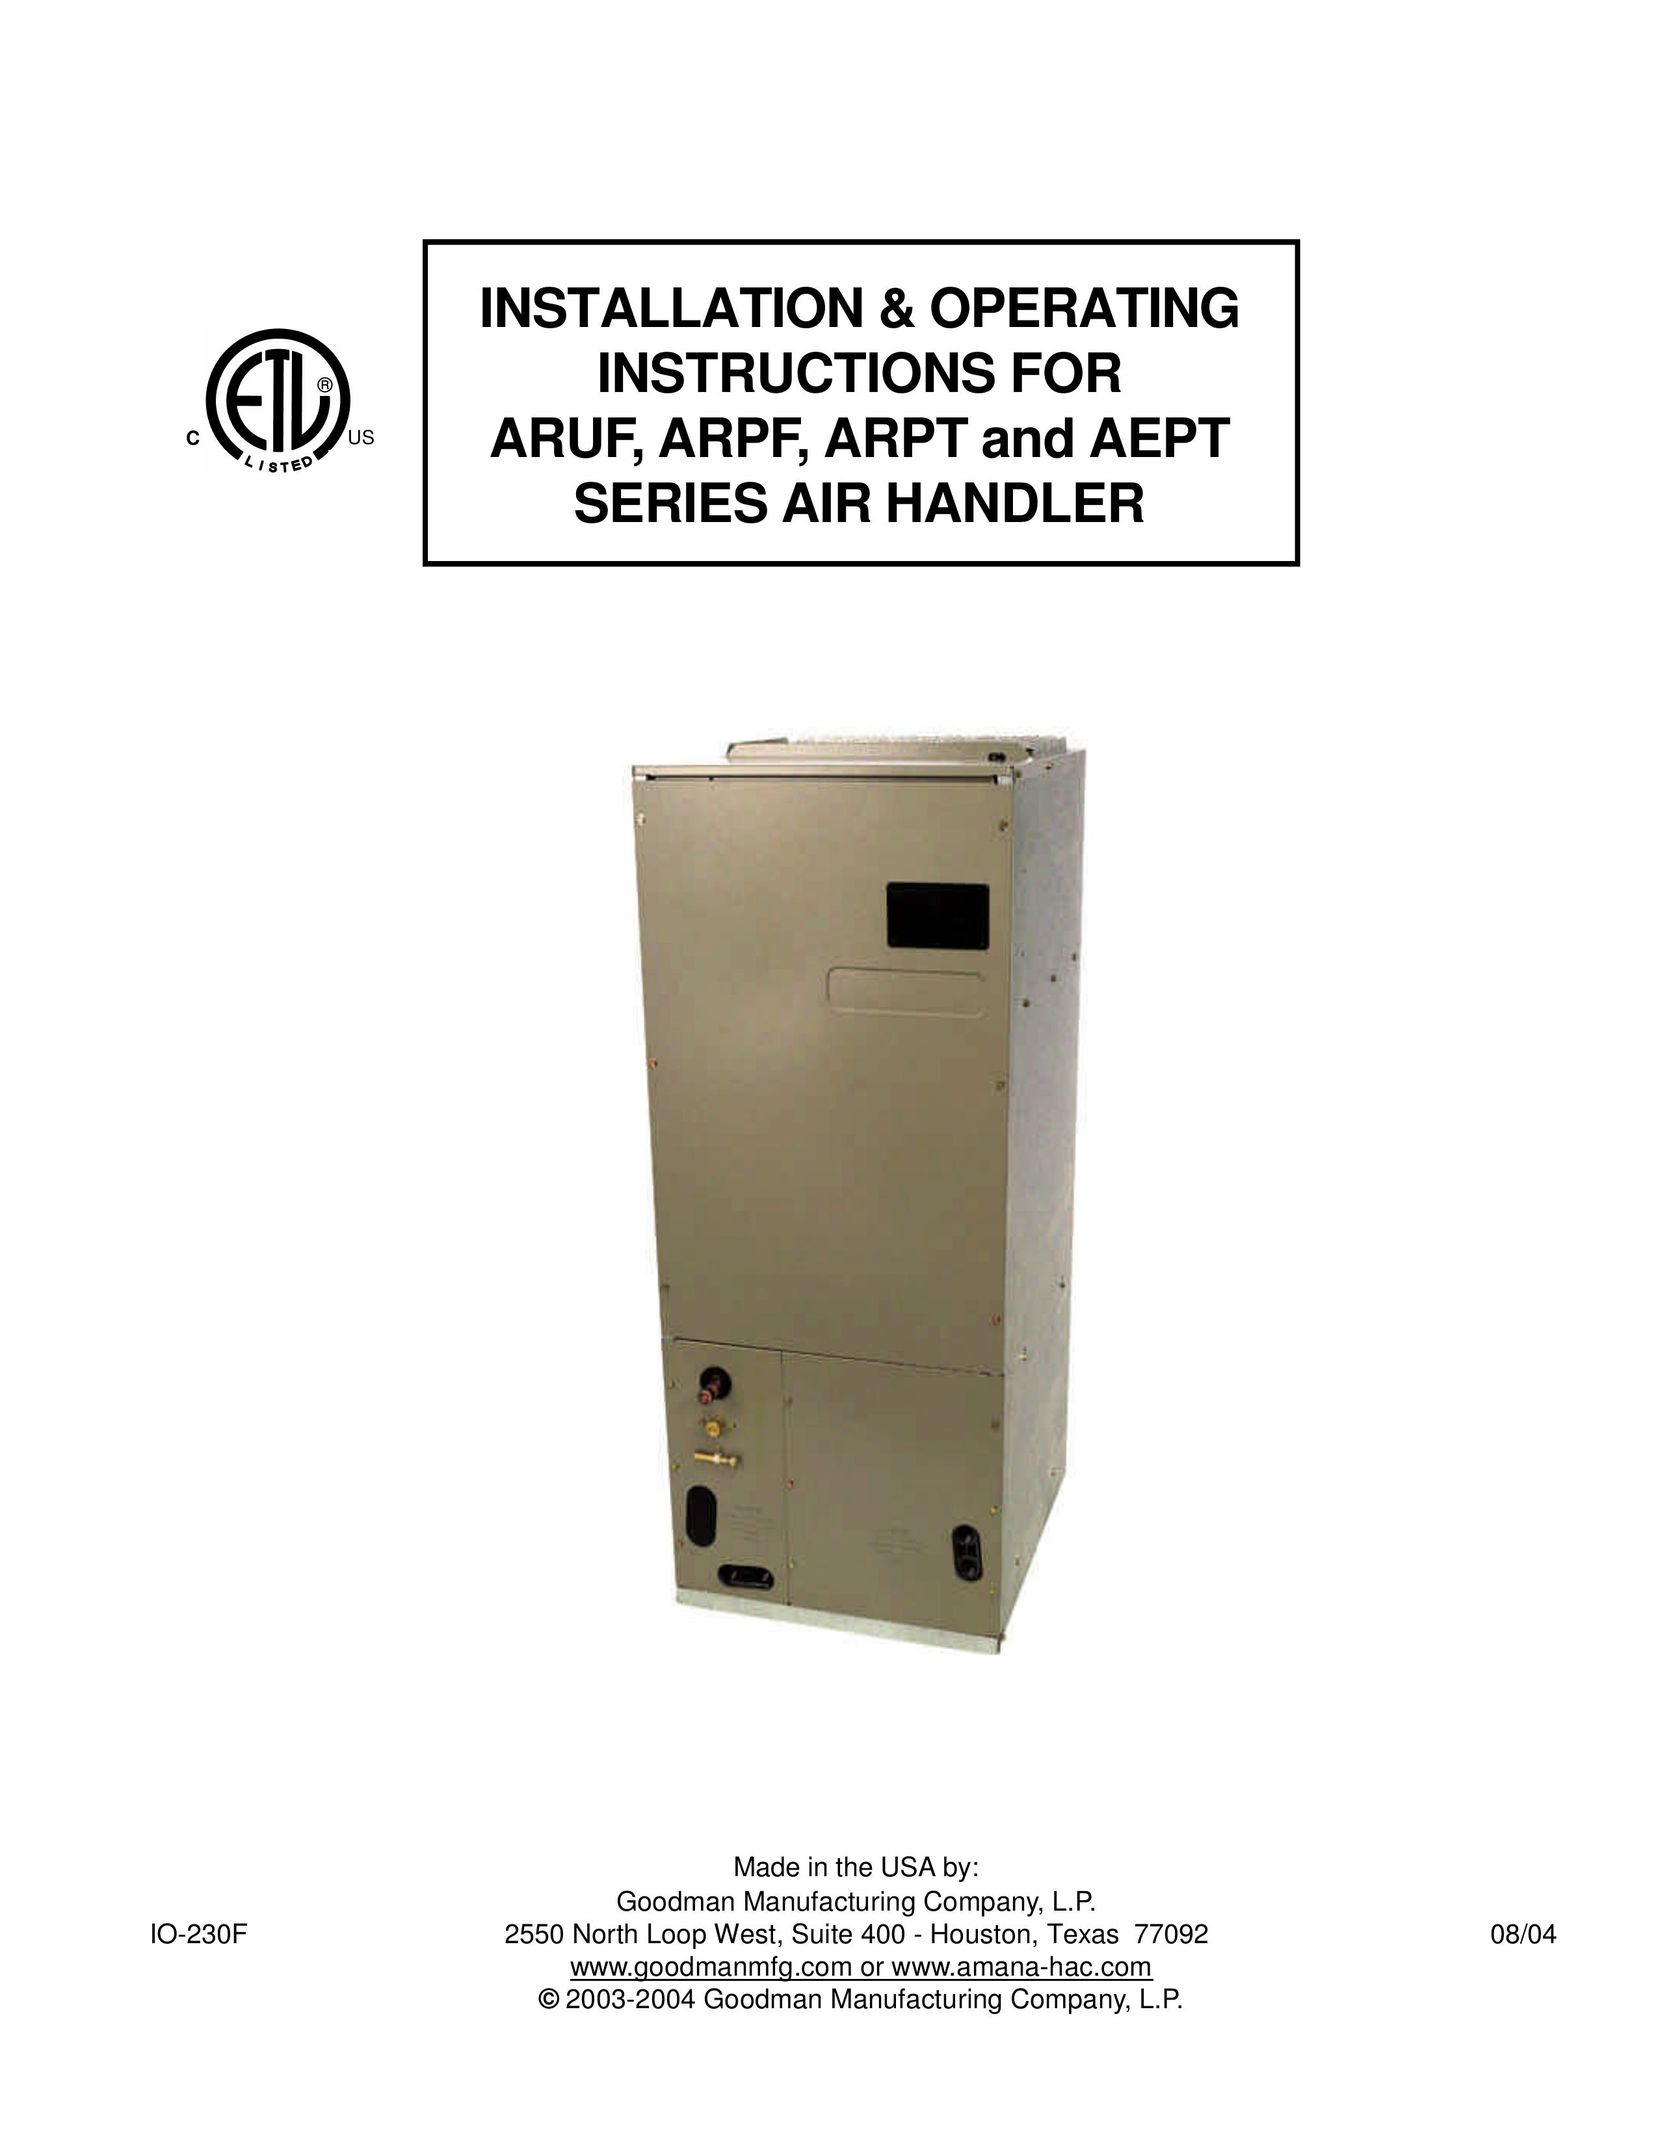 Goodman Mfg ARPF Air Conditioner User Manual